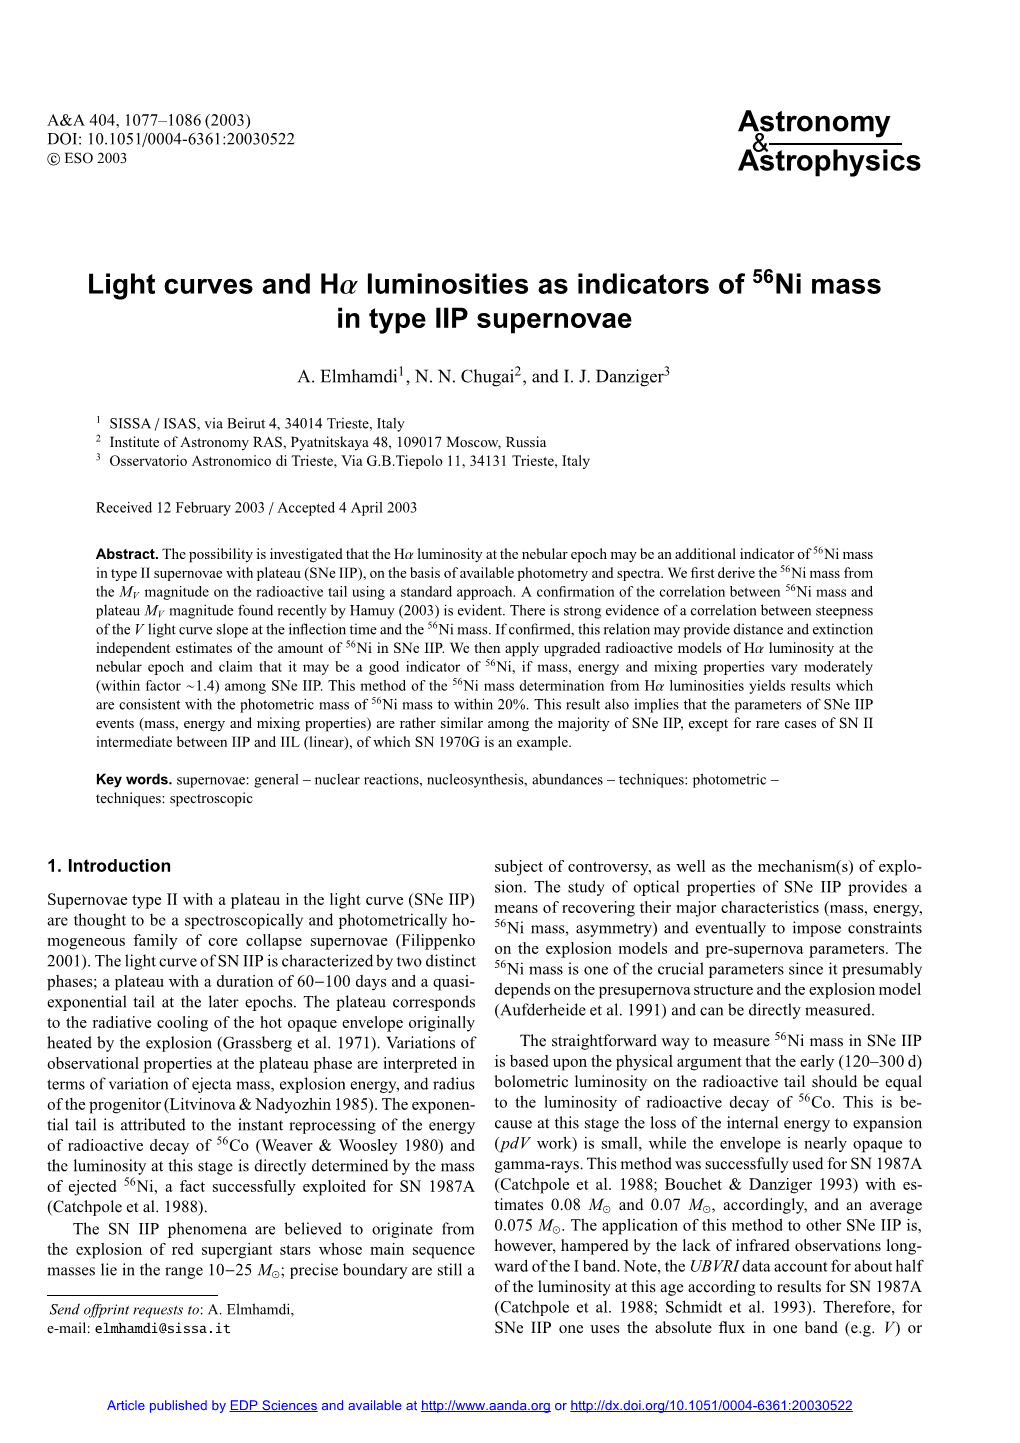 Light Curves and Hα Luminosities As Indicators of $\Mathsf{^{56}}$Ni